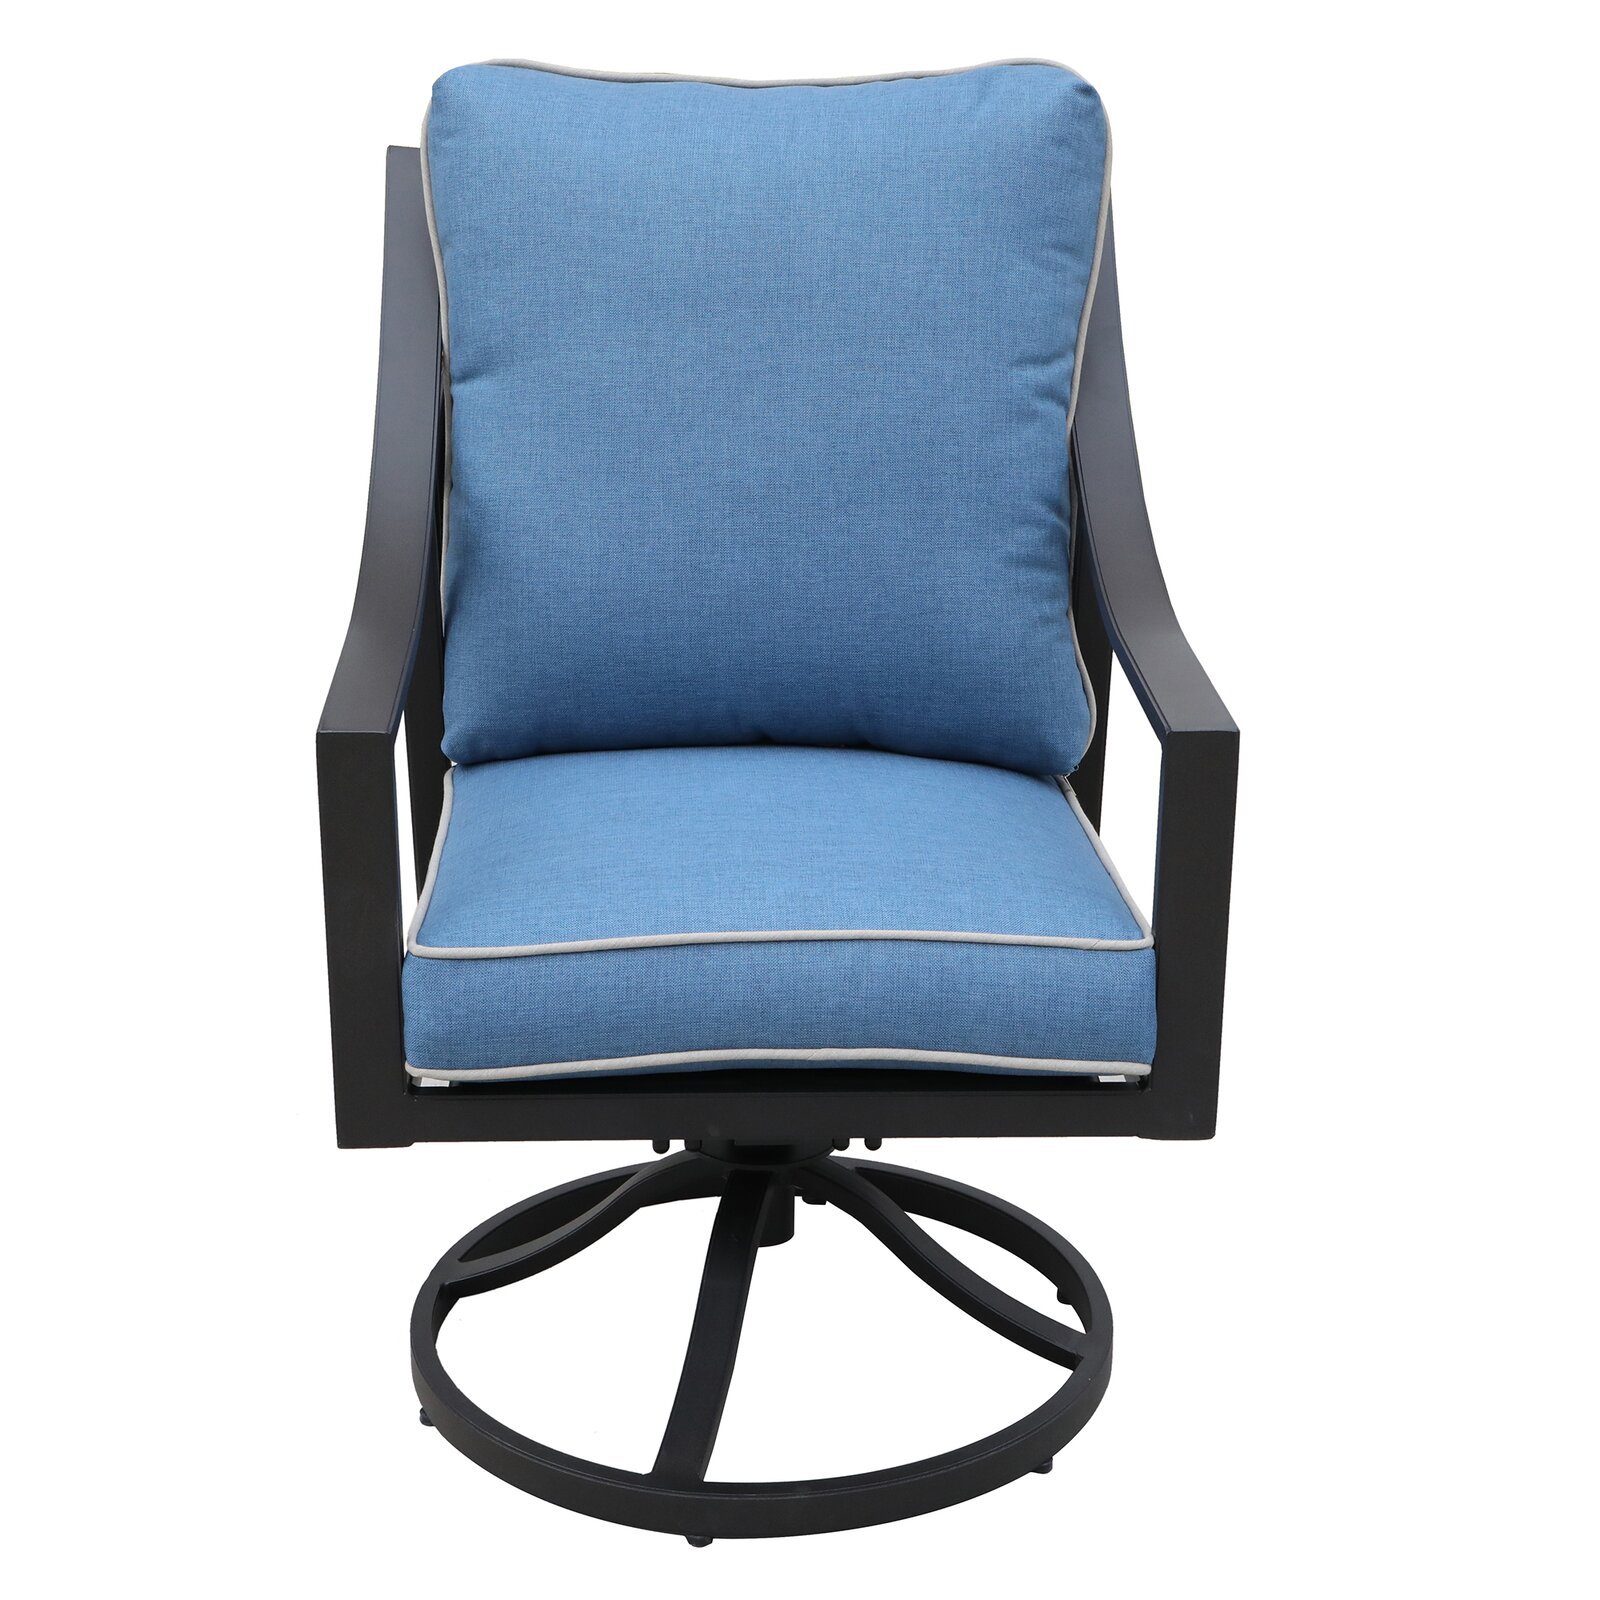 Outdoor Patio Aluminium Frame Dining Swivel Rocker Chair With Cushion-CASAINC